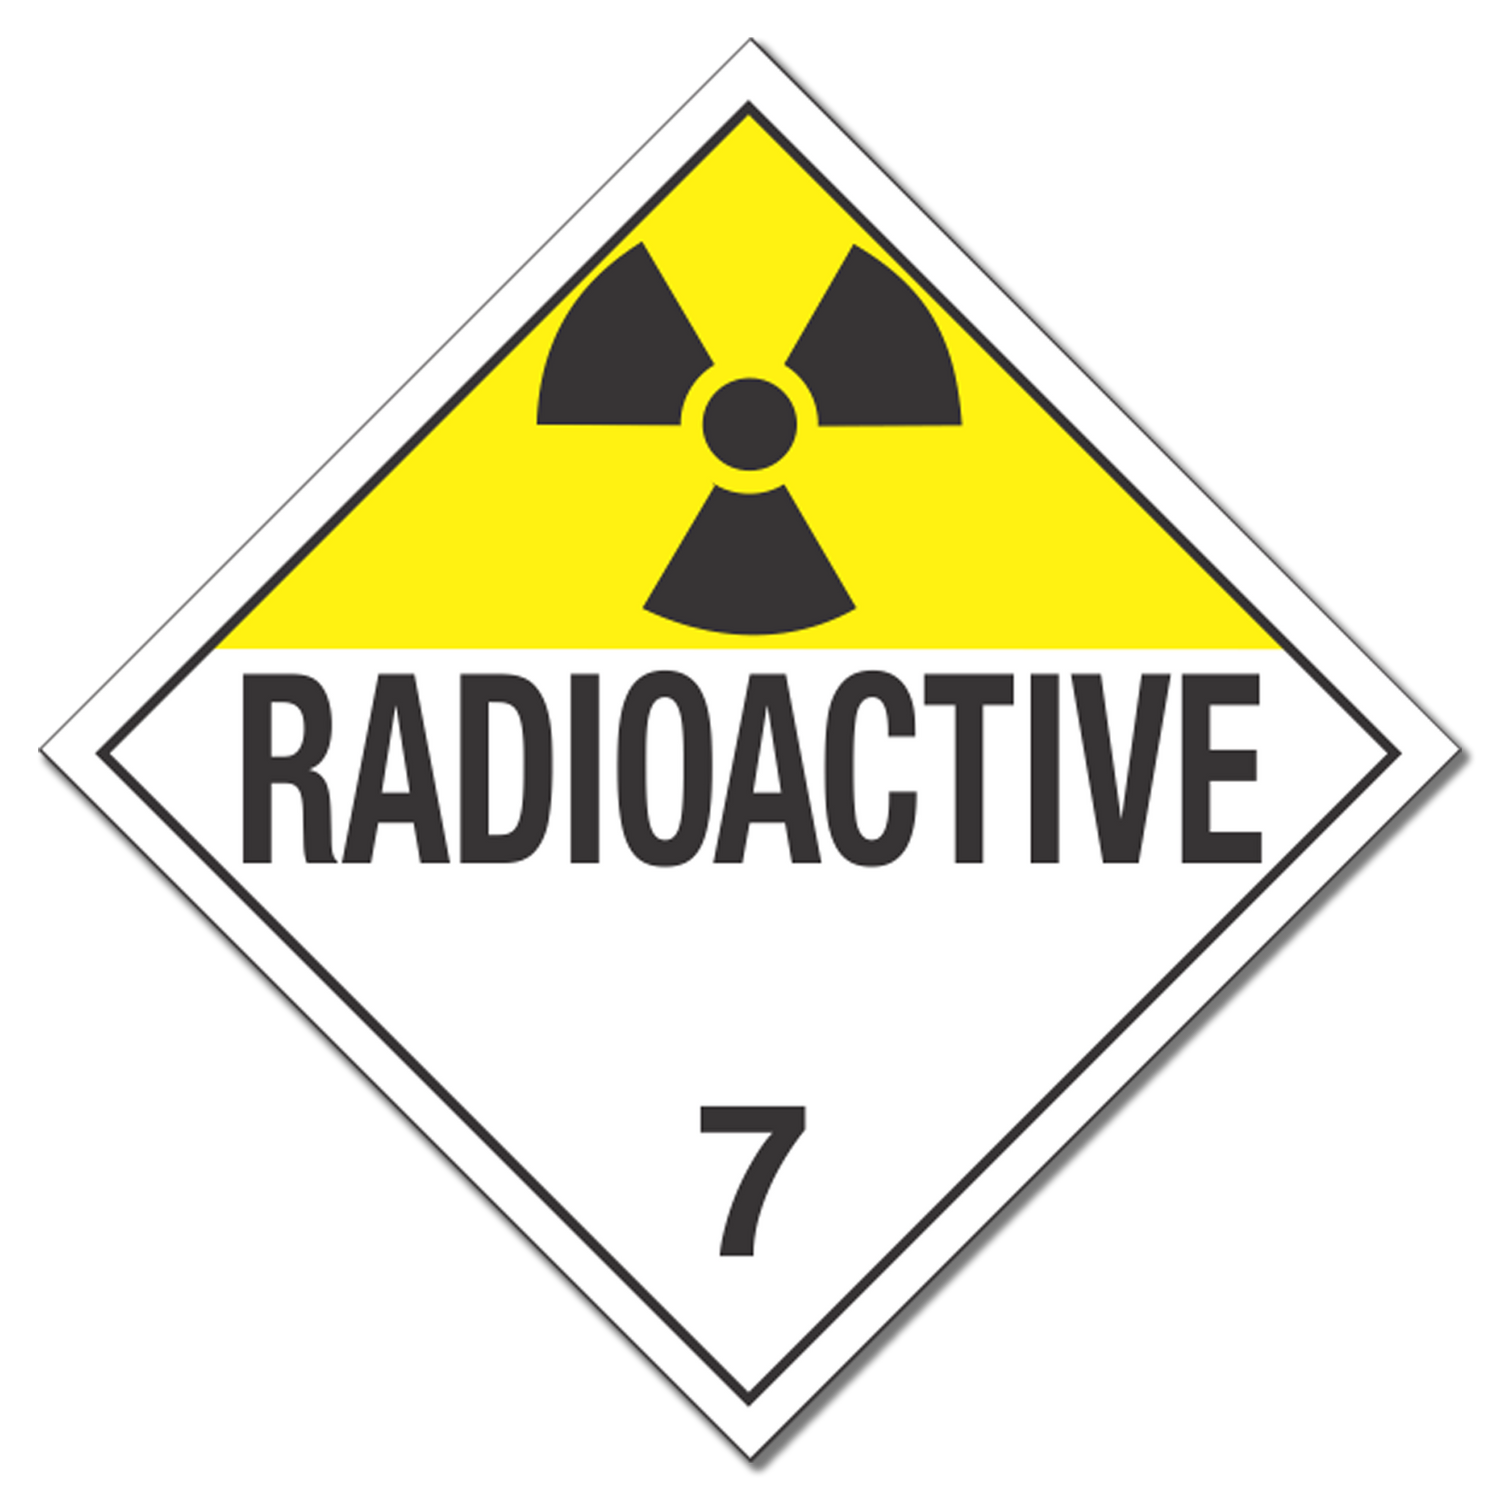 Class 7 - Radioactive material, UN Dangerous Goods